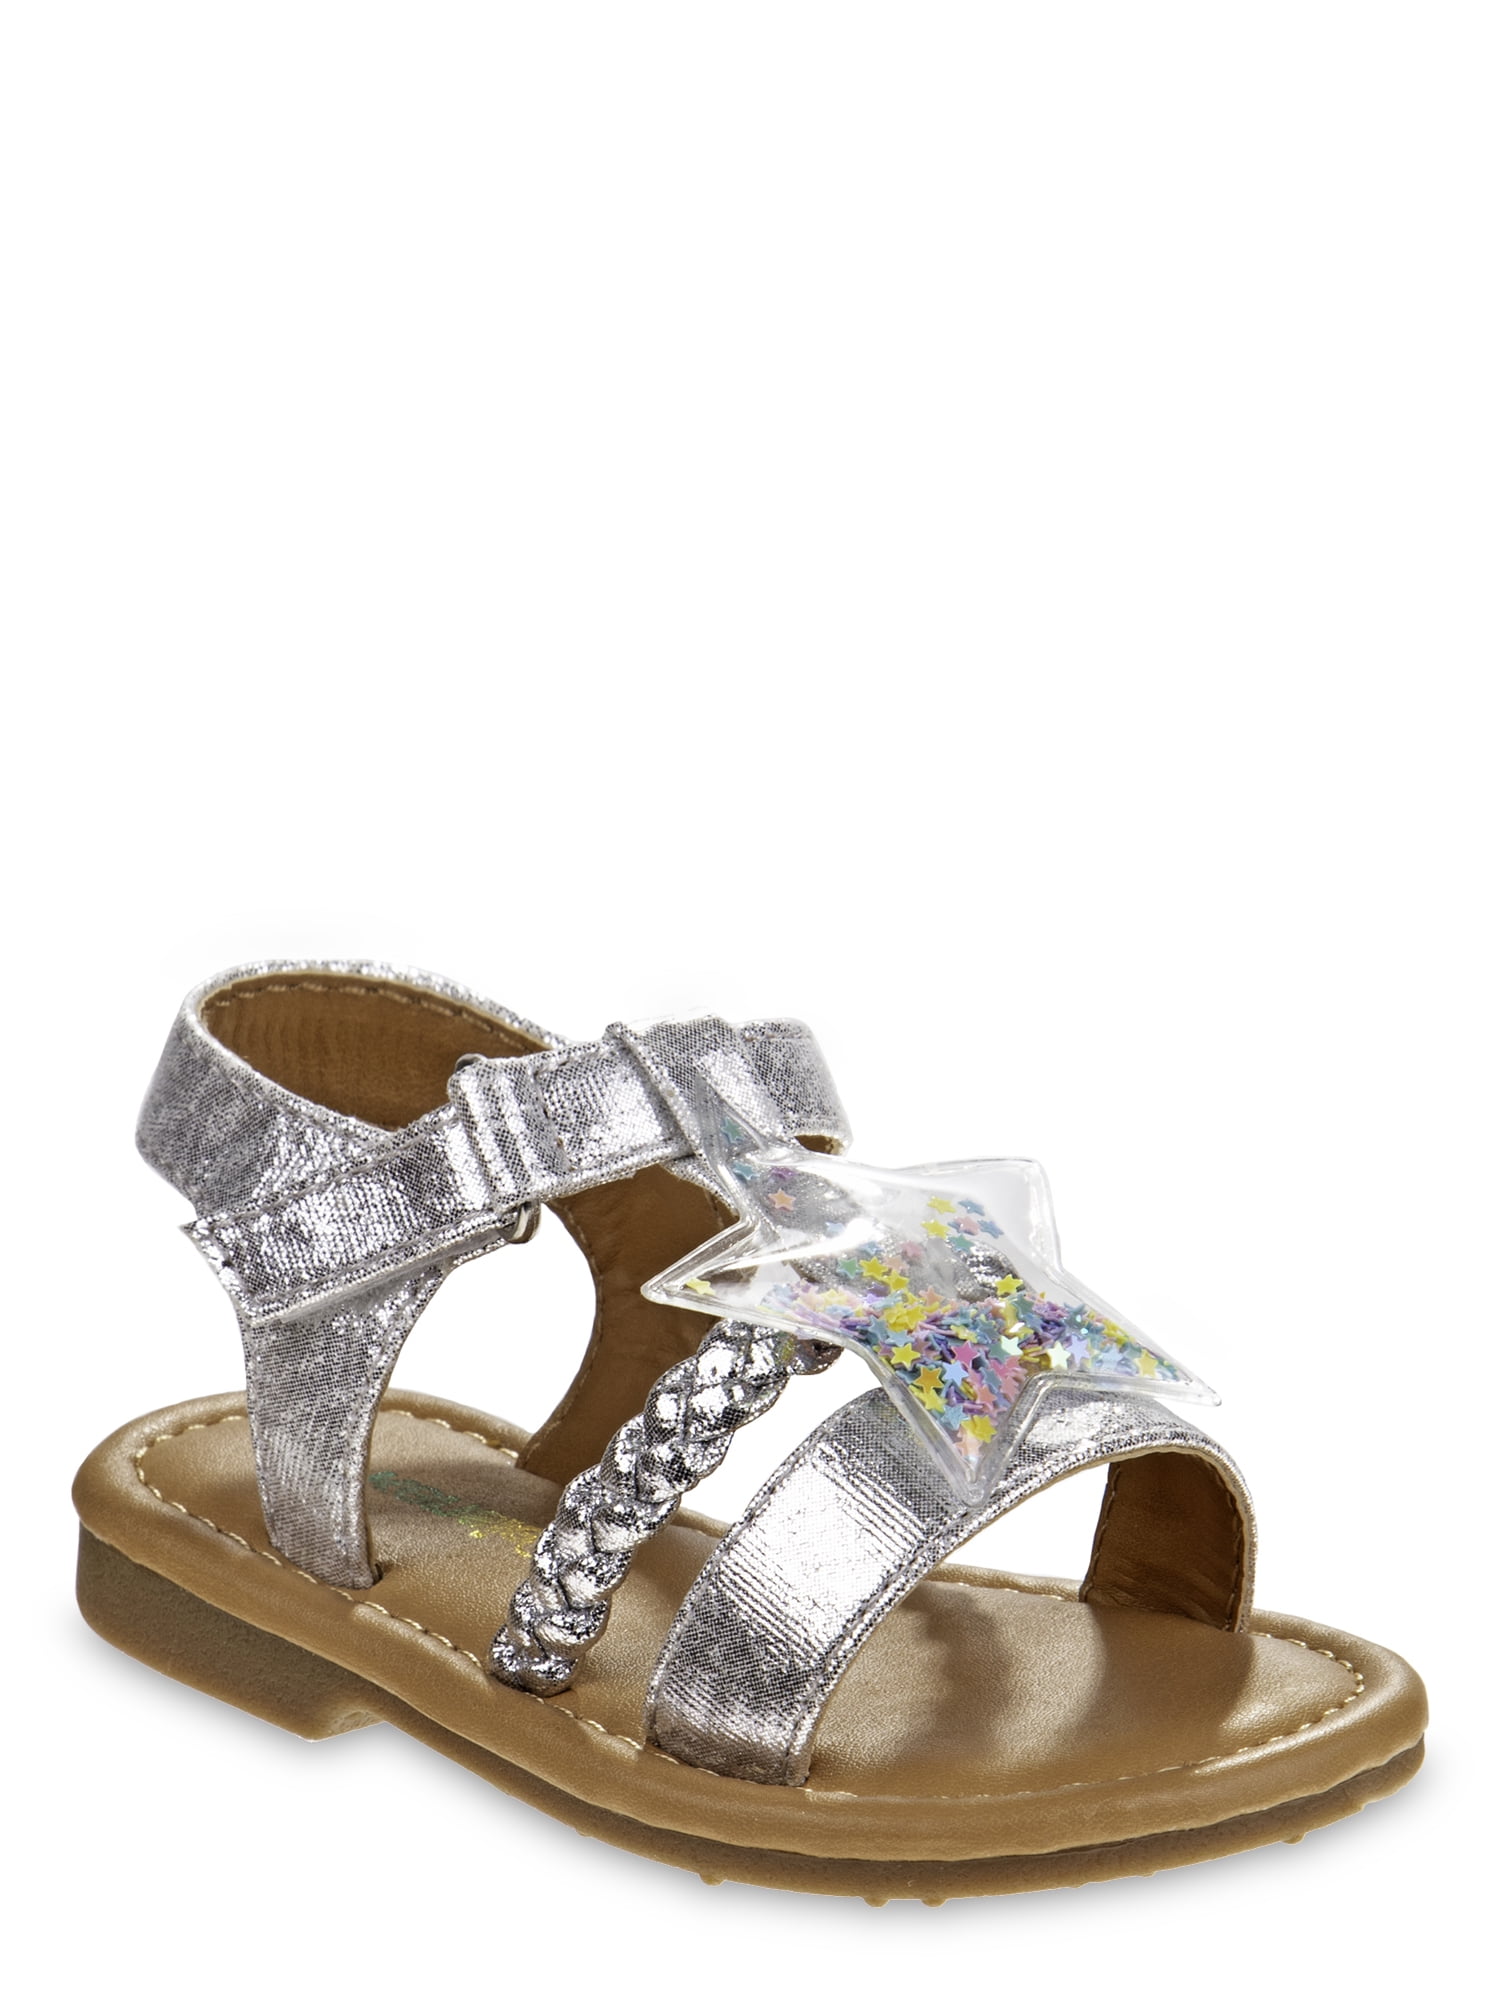 silver star sandals